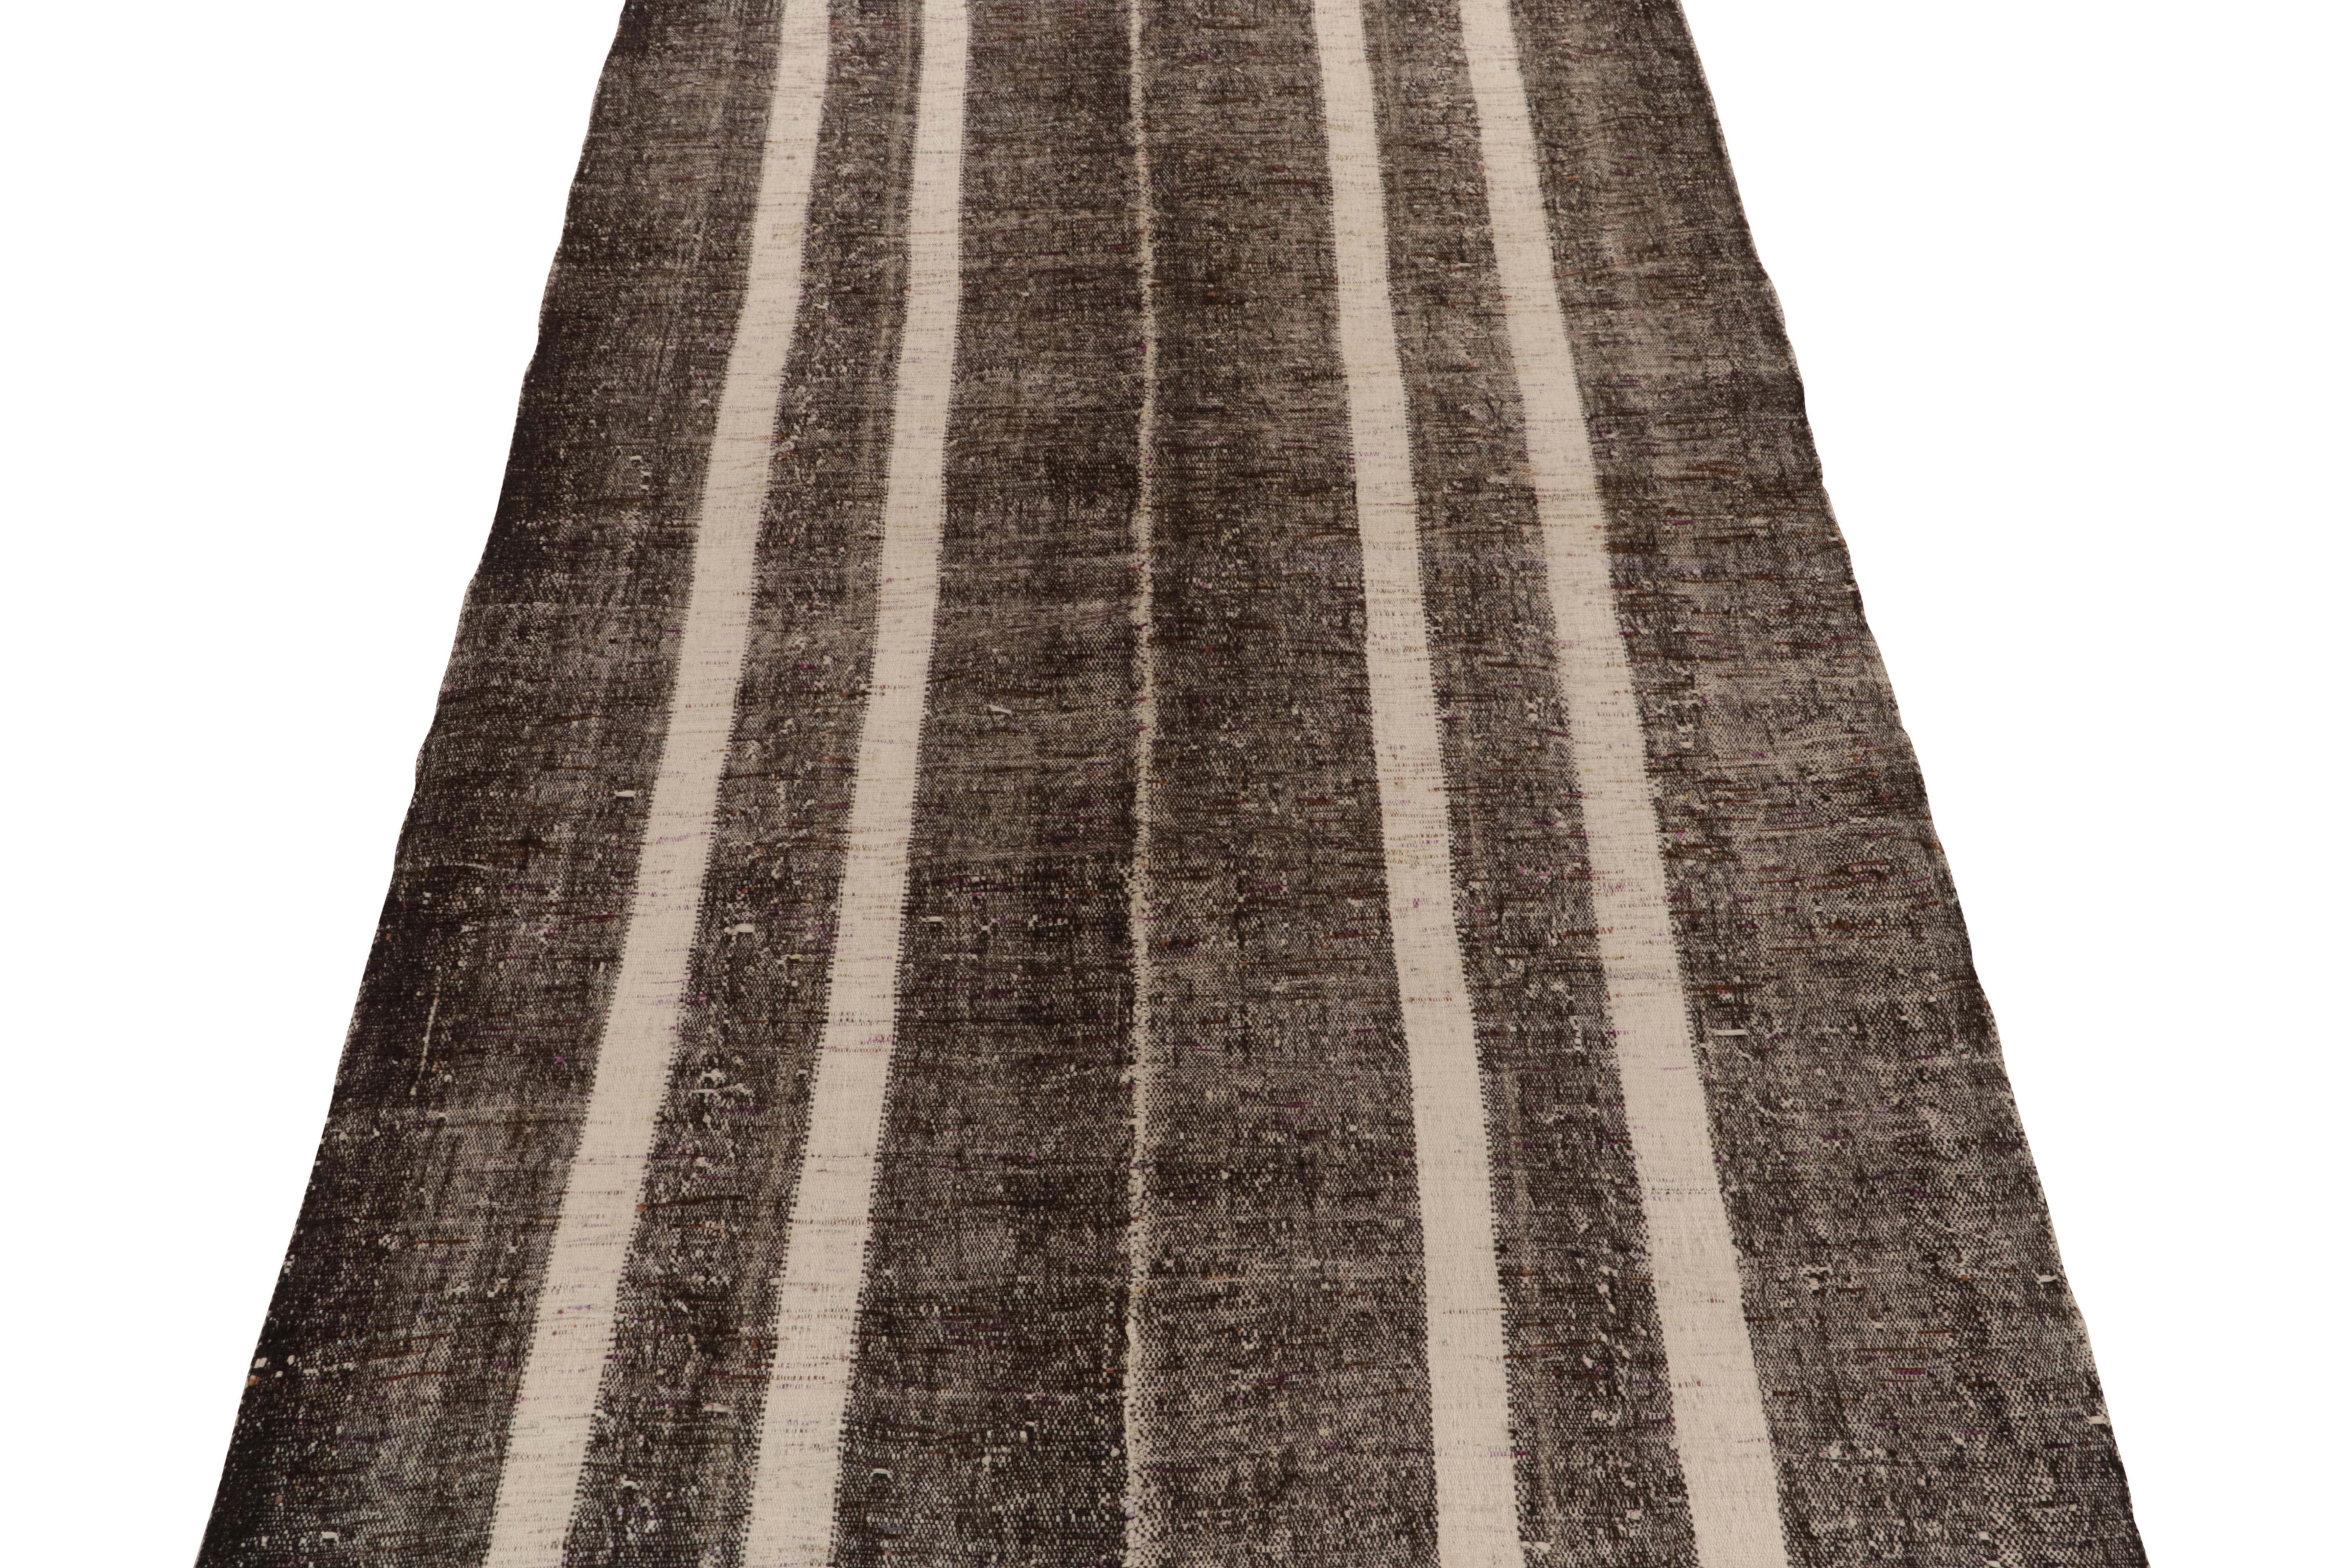 Hand-Knotted Vintage Turkish Kilim Rug in Beige-Brown Stripe Patterns by Rug & Kilim For Sale